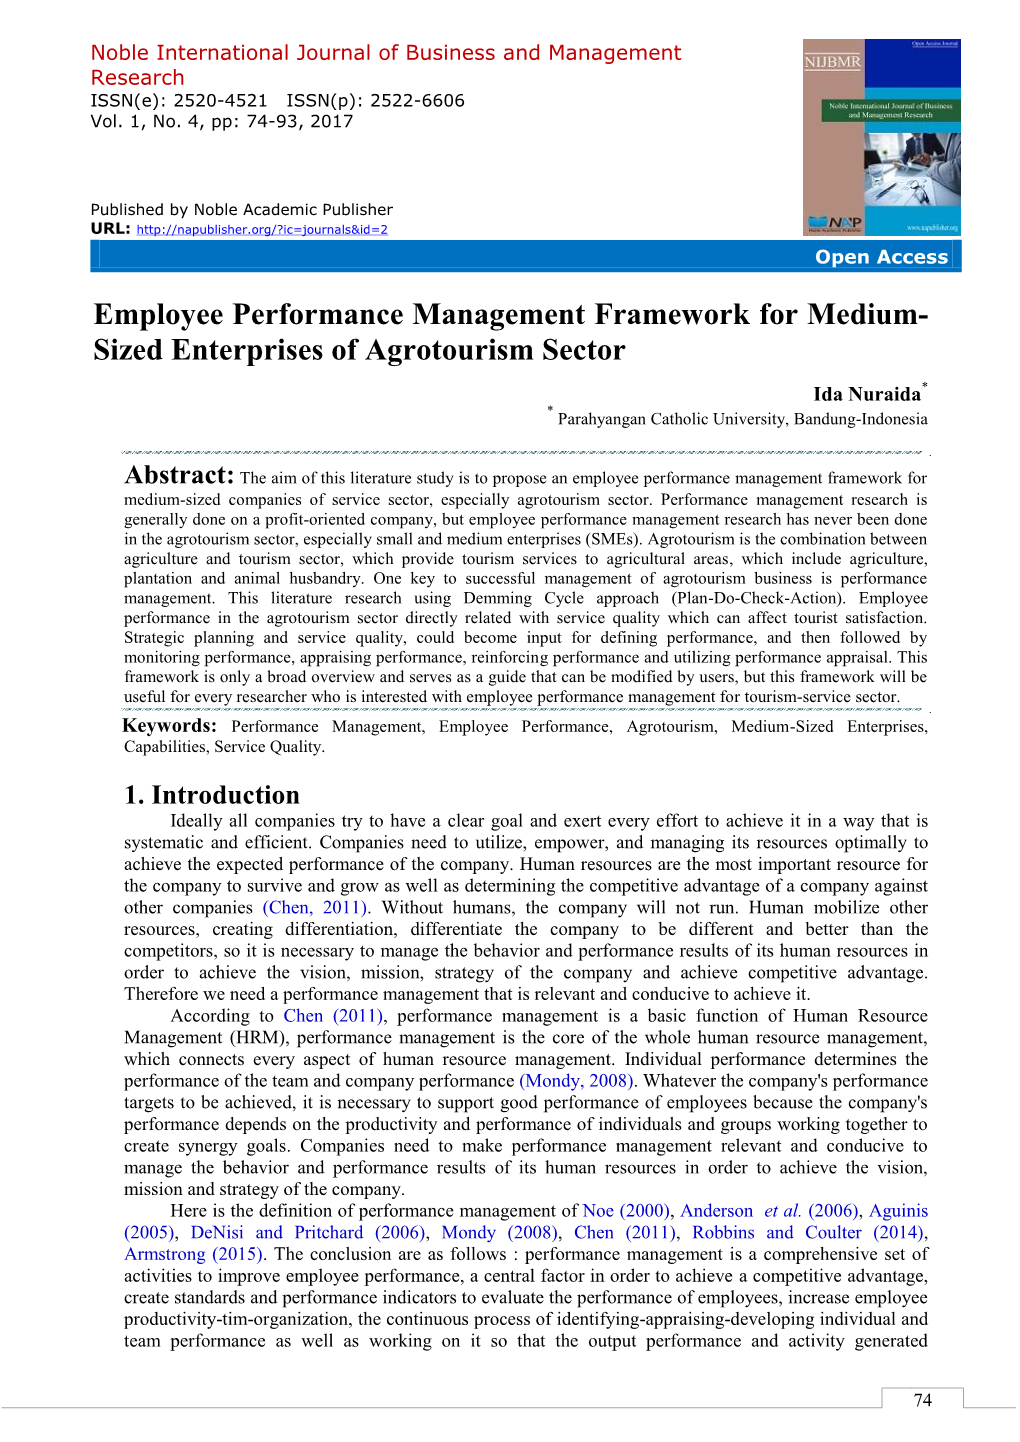 Employee Performance Management Framework for Medium- Sized Enterprises of Agrotourism Sector